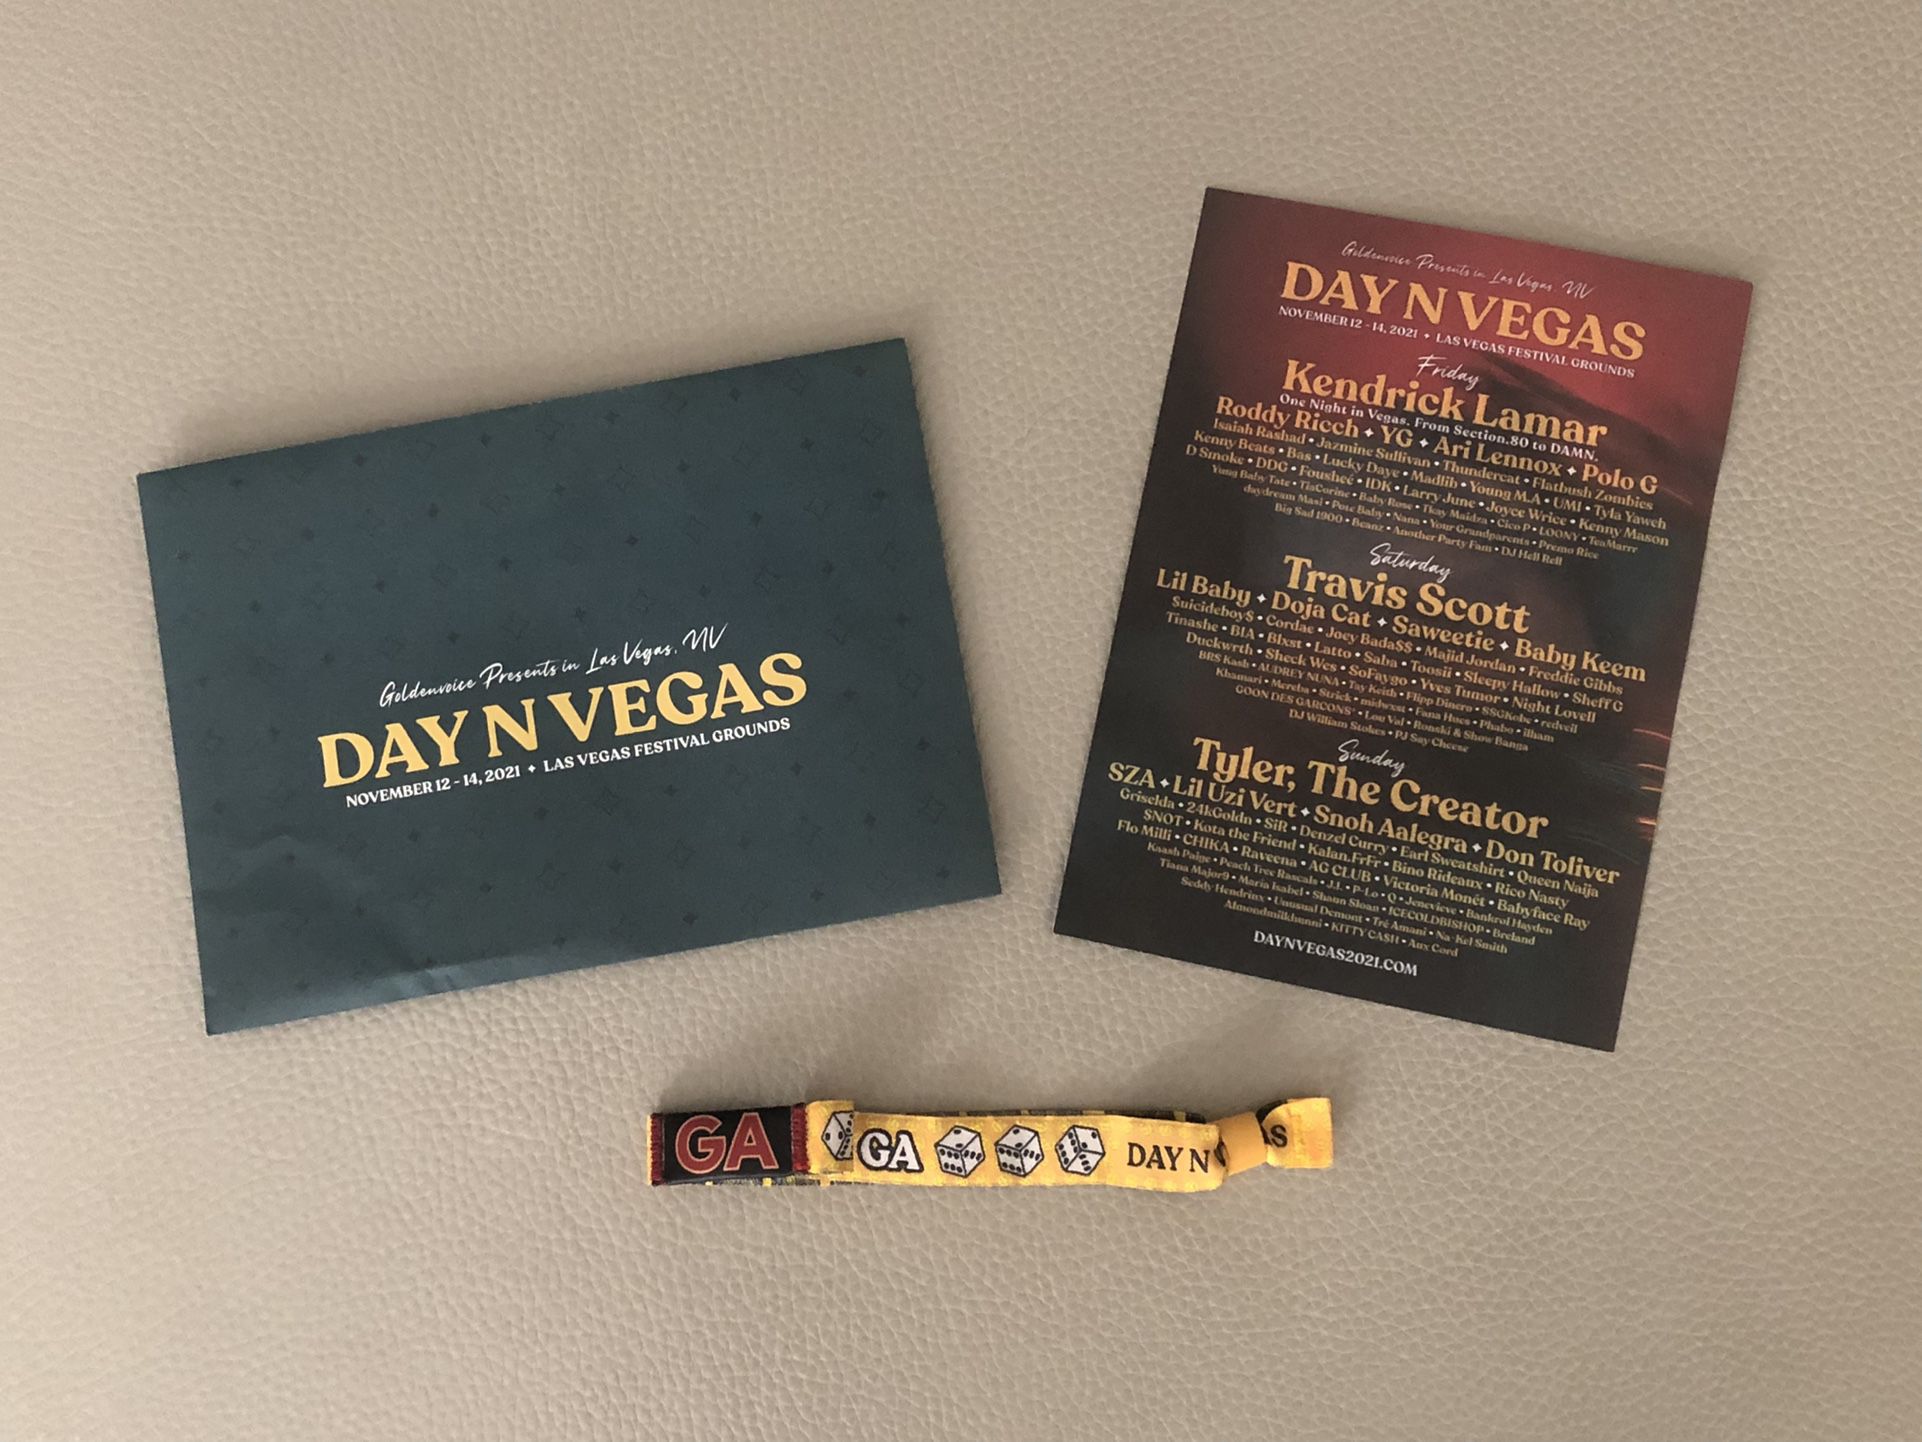 Day N Vegas GA Ticket Wristband Nov 12 - 14 